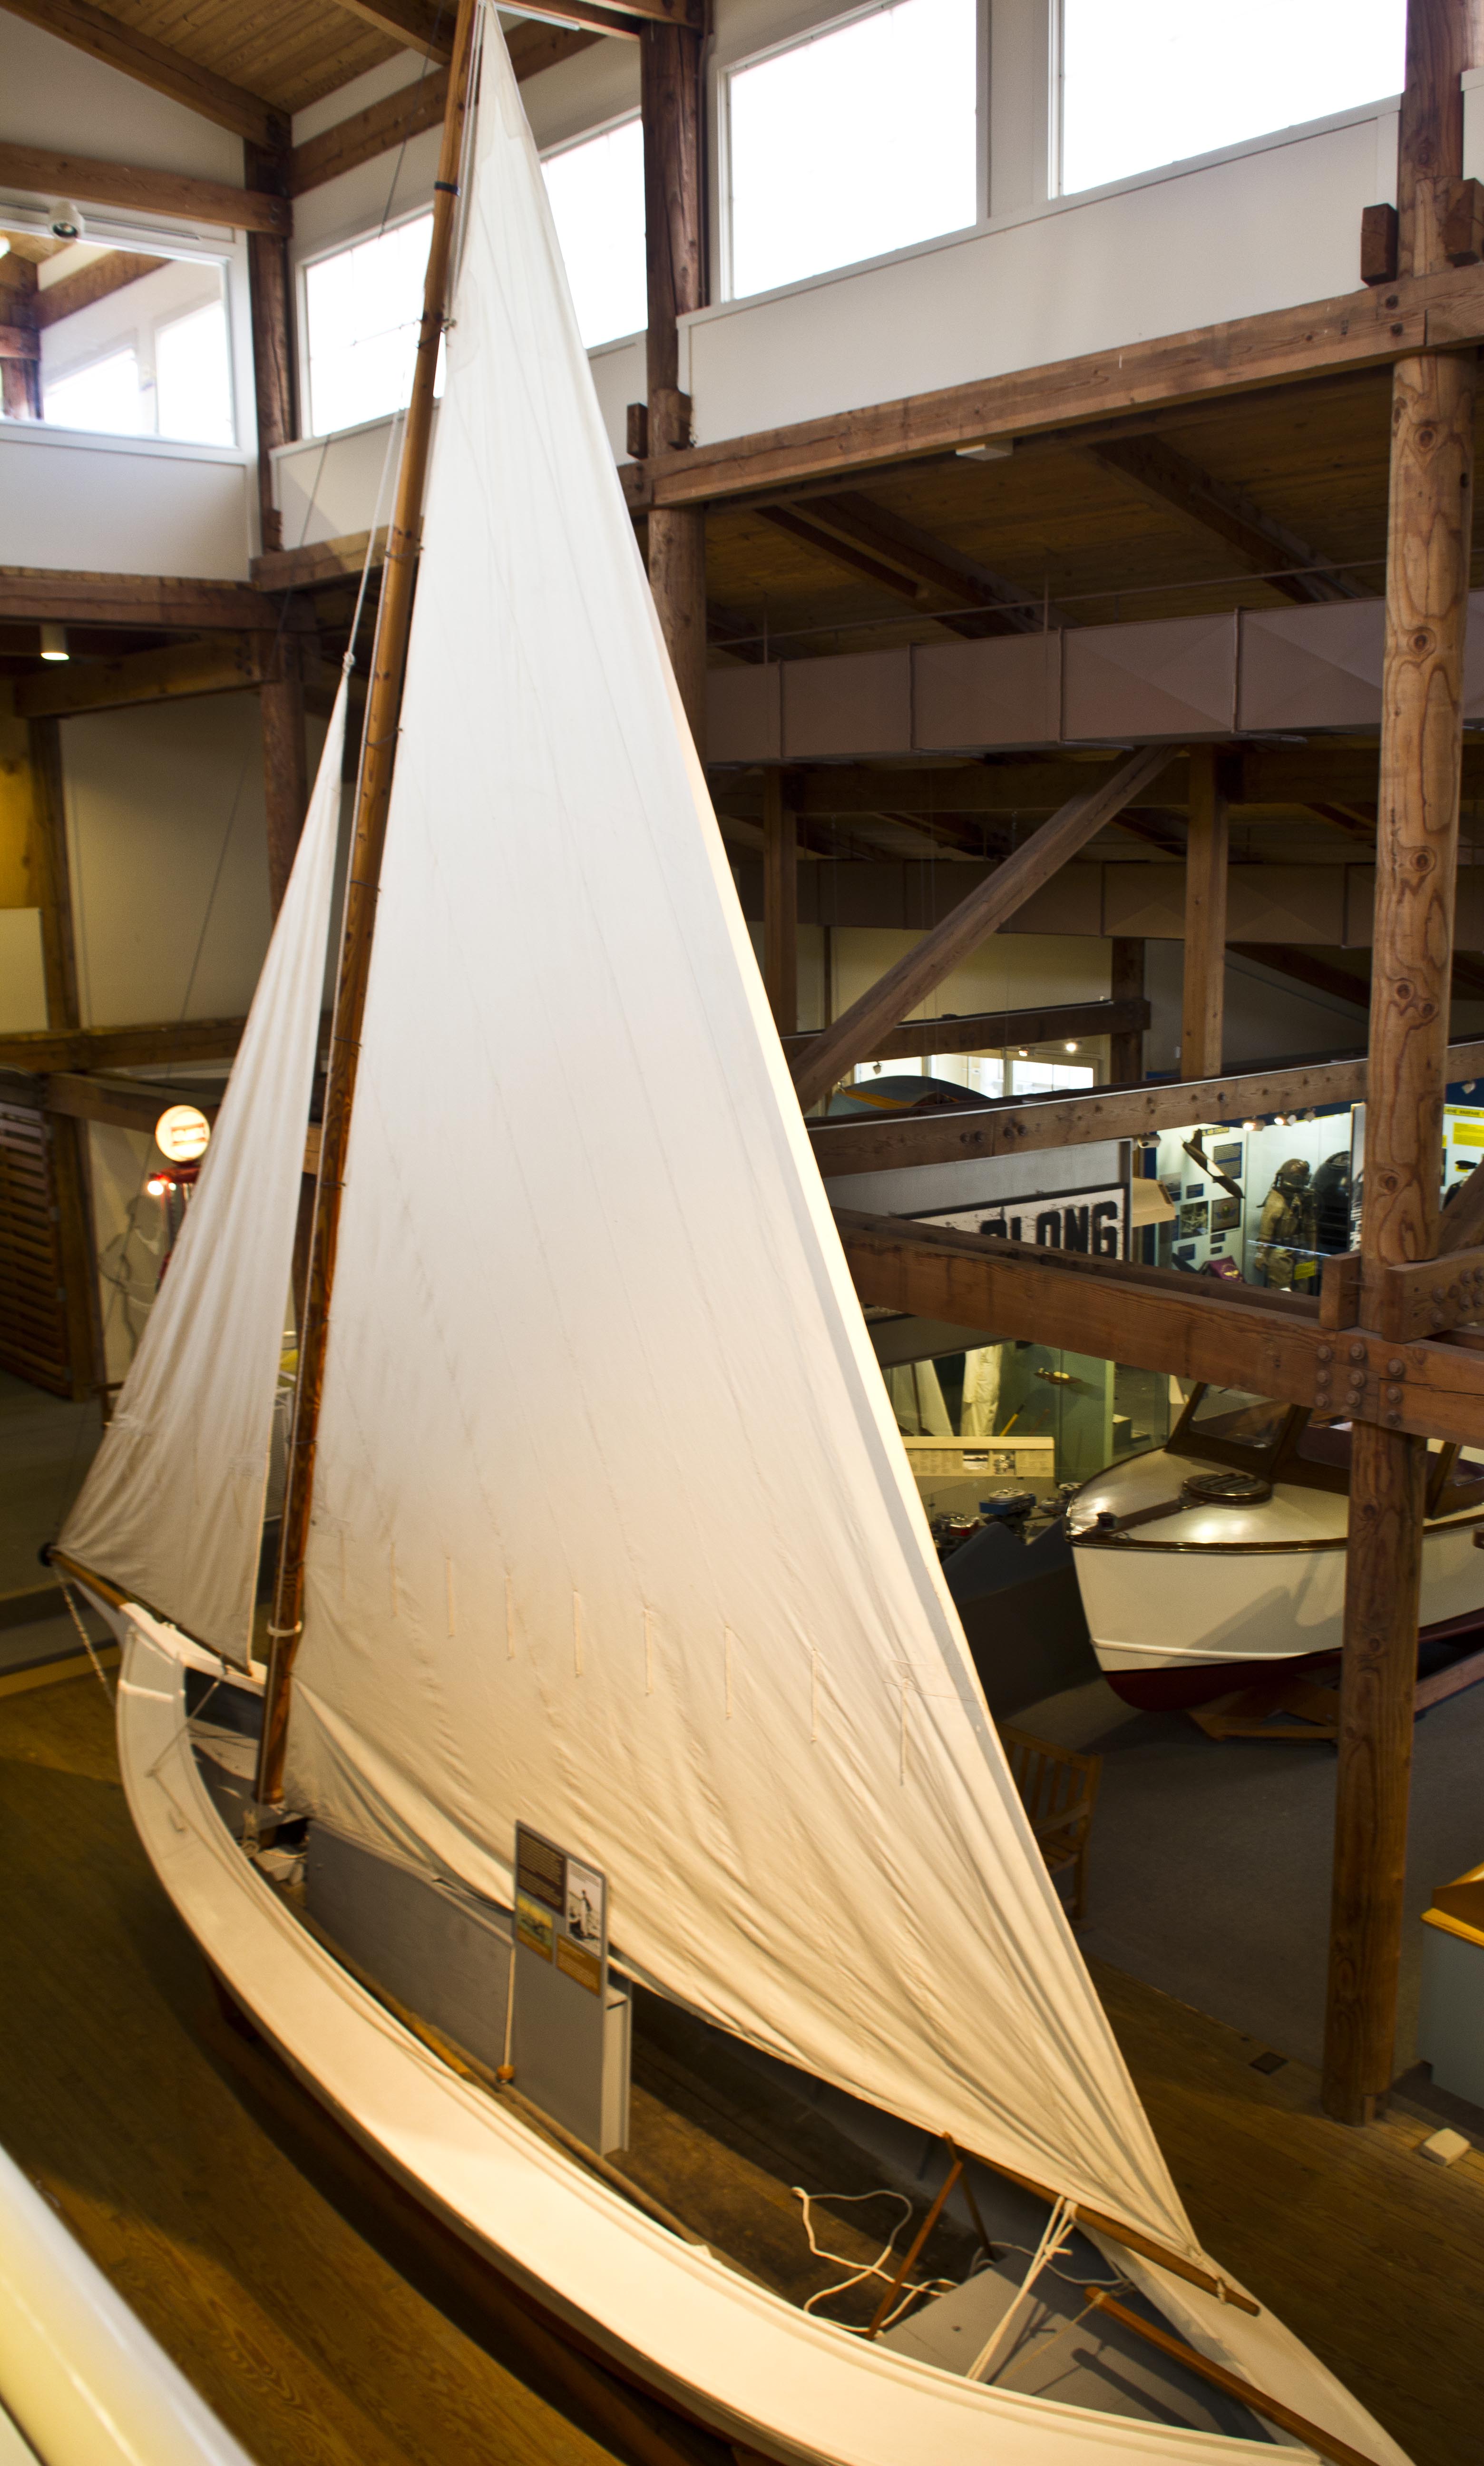 Tags: boat , calvert marine museum , maritime museum , sail boat